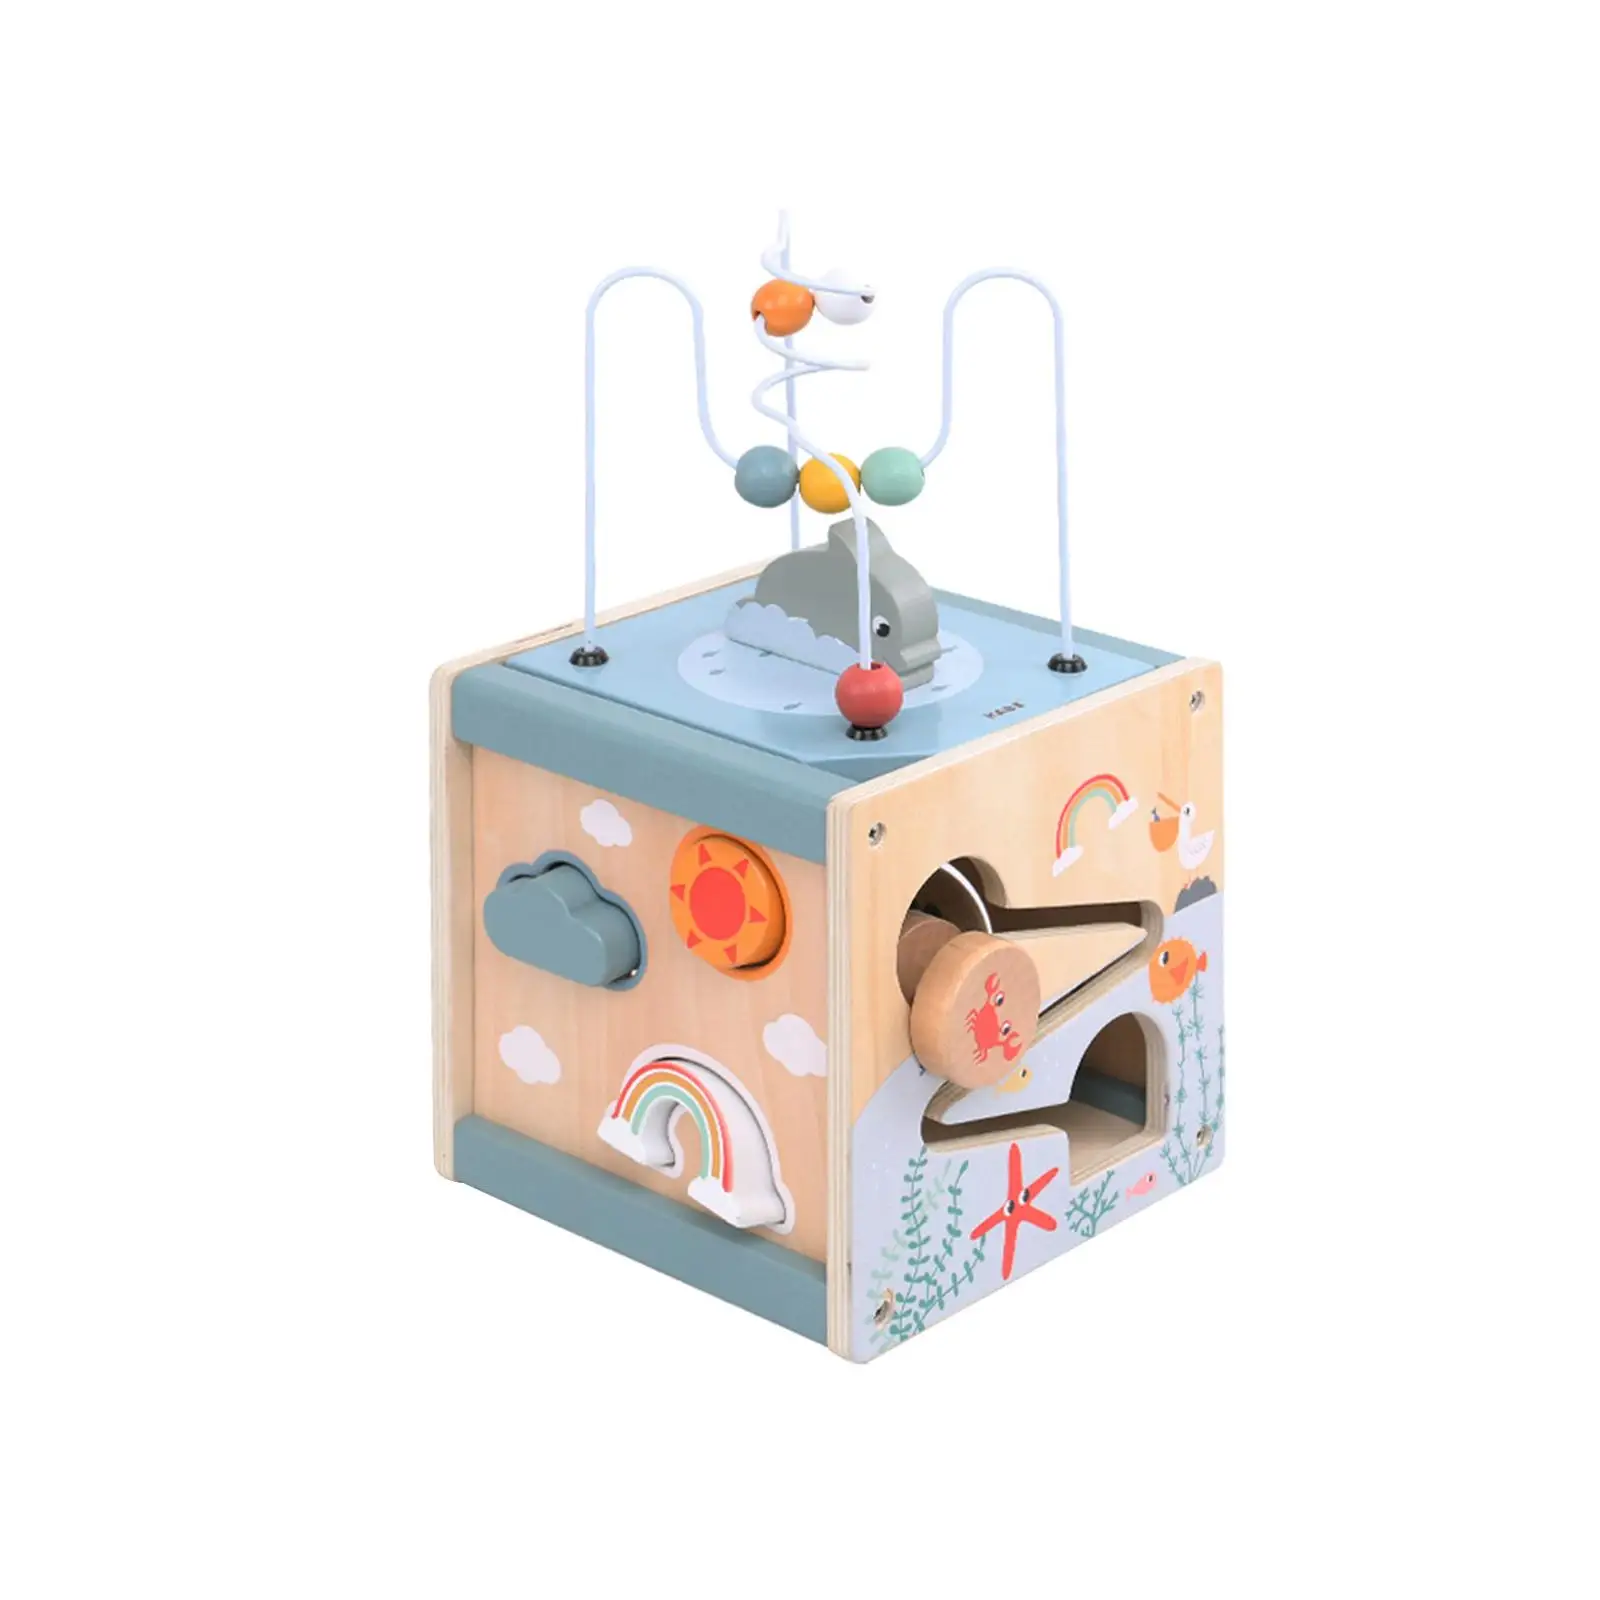 Activity Cube Toys Developmental Toys Early Educational for Preschool Kids